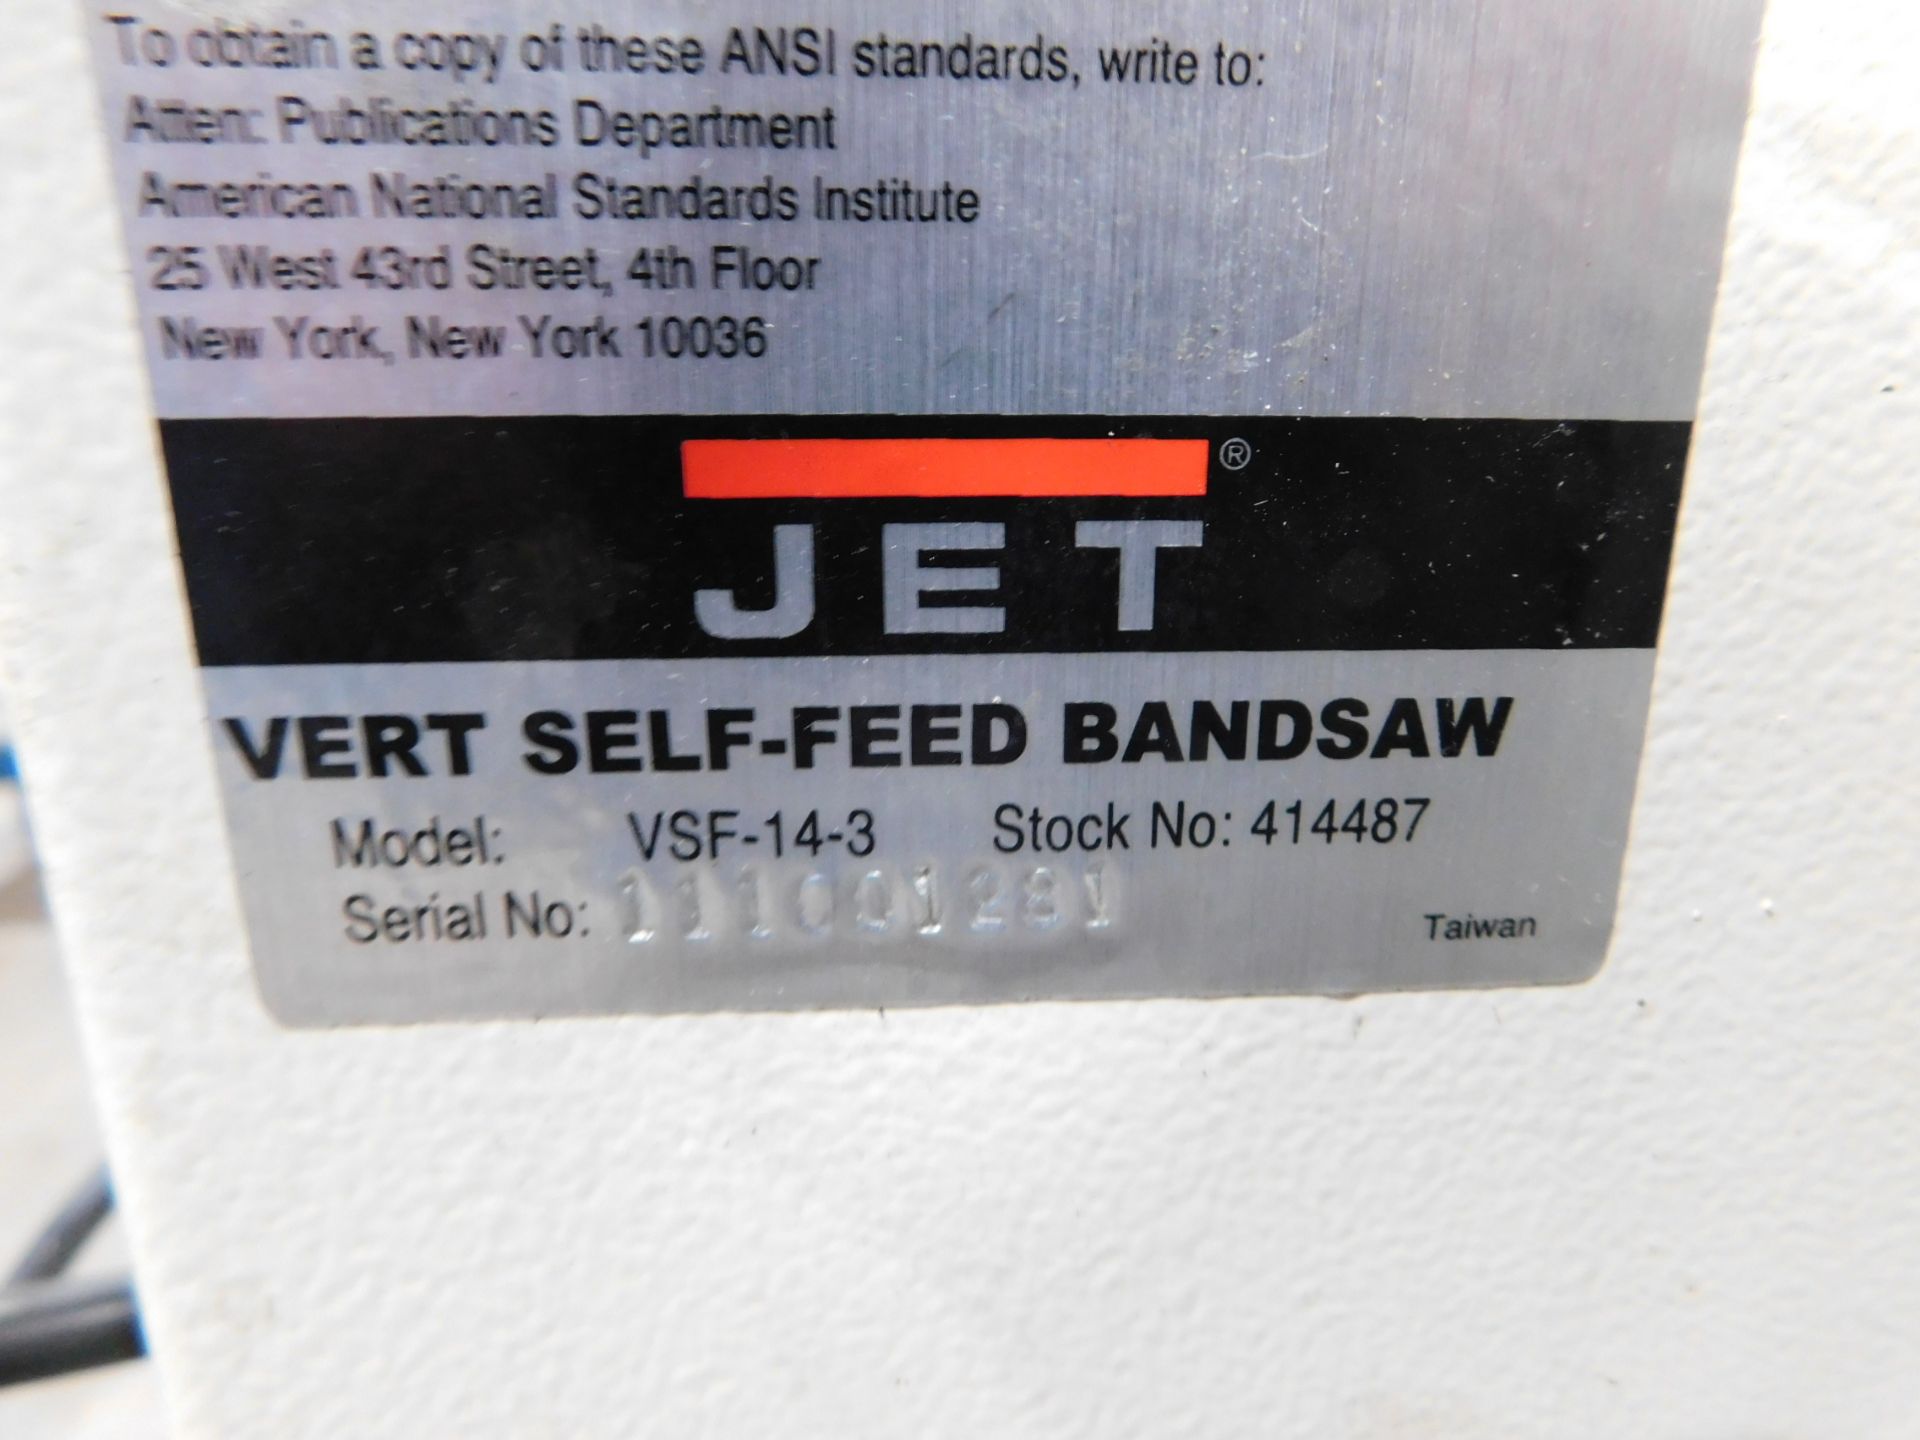 Jet Model VSF-14-3 Vertical Self-Feed Bandsaw (Roll In Type), s/n 111001281 - Image 5 of 6